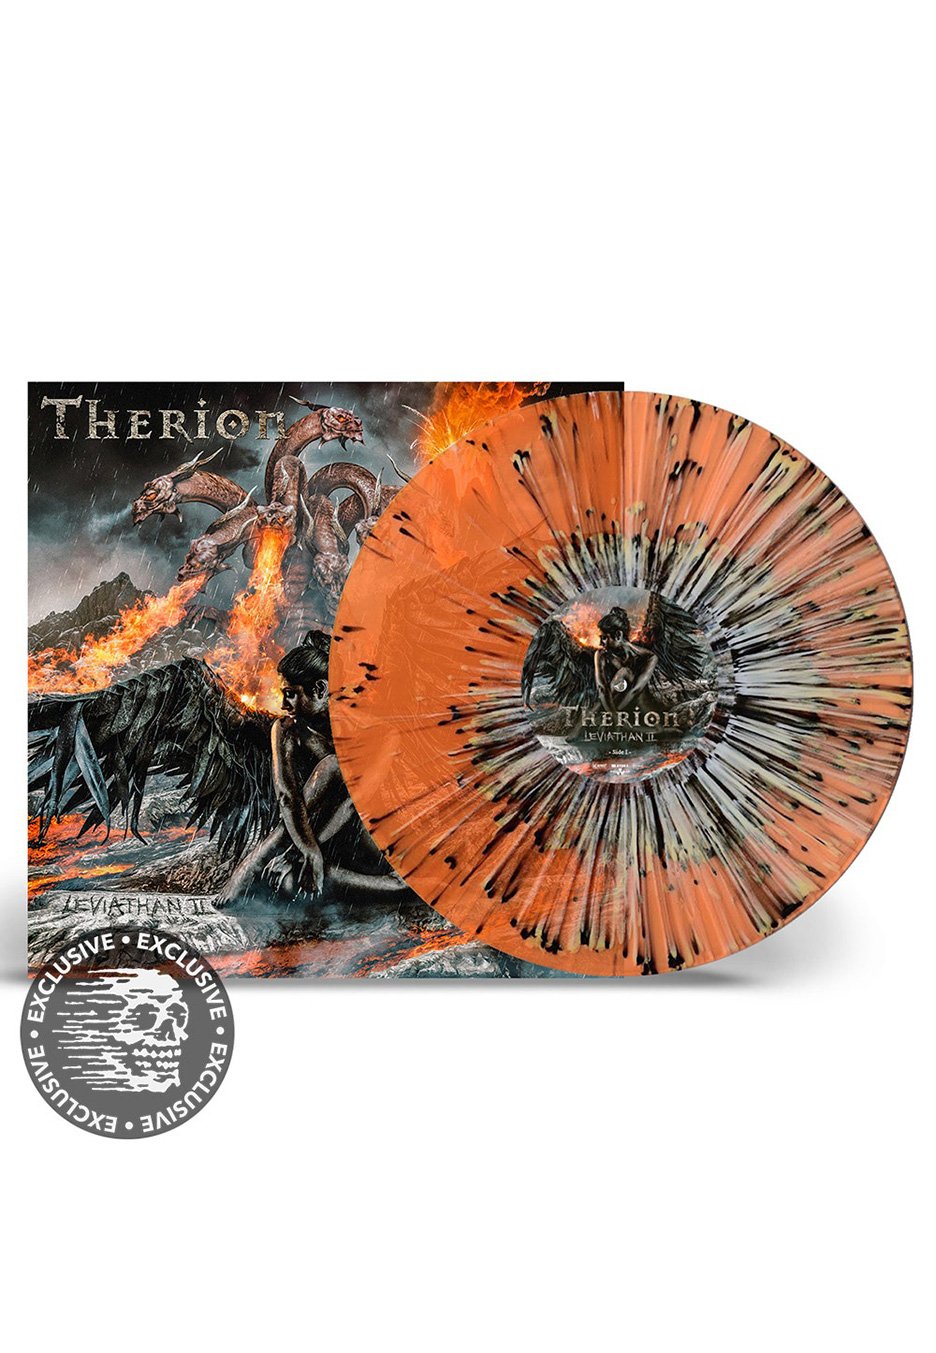 Therion - Leviathan II Ltd. Orange/Black/White - Splattered Vinyl